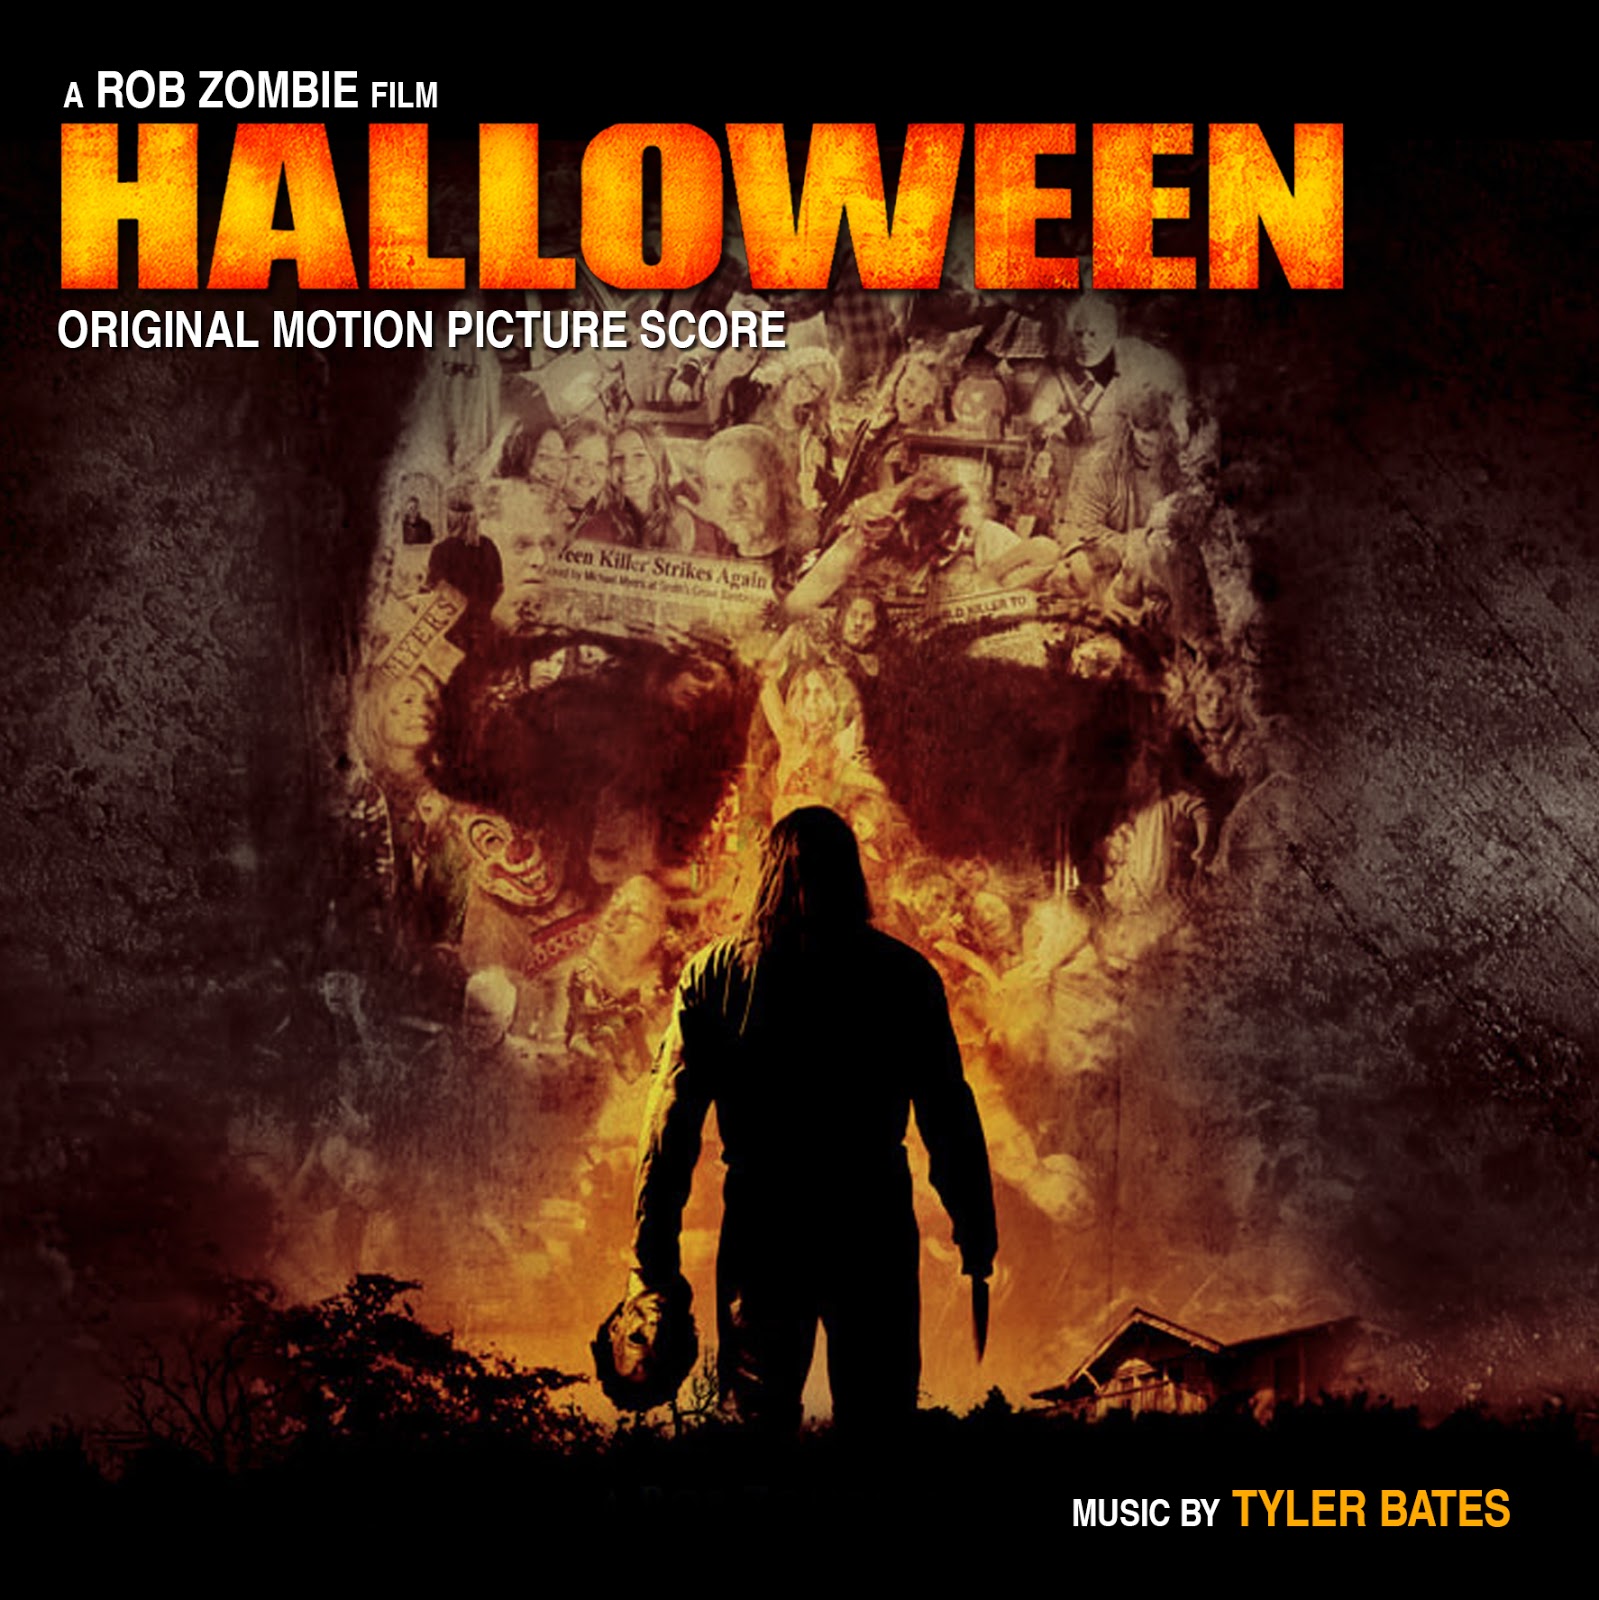 Zombie soundtrack. Songs in album Tyler bates - Halloween II (Original Motion picture score) (2009).